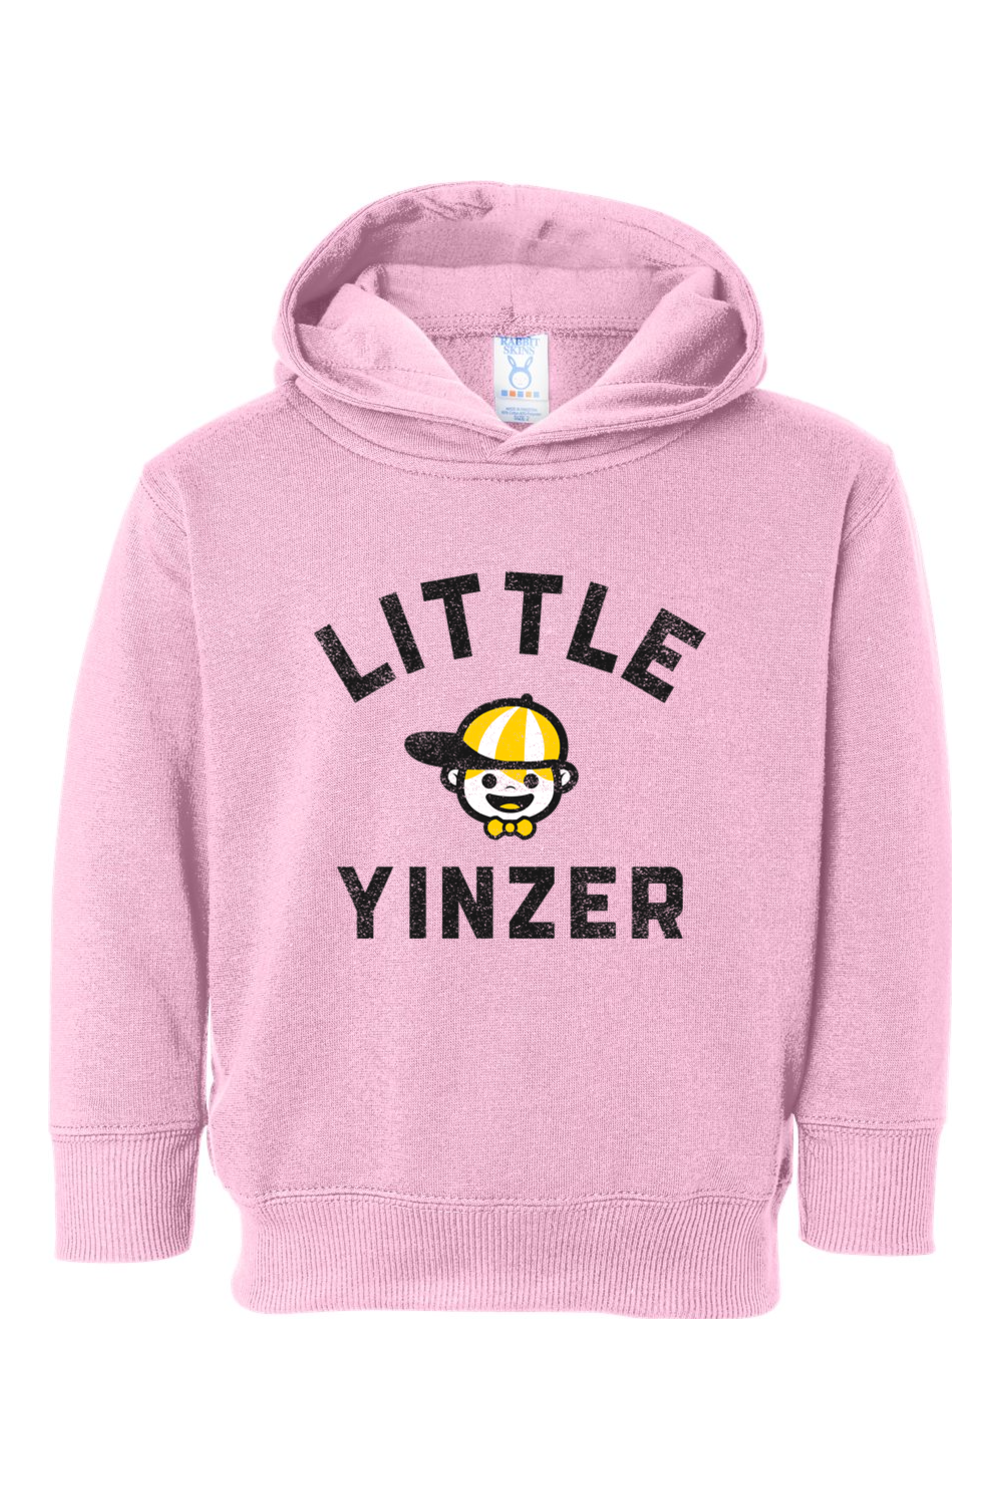 Little Yinzer - Toddler Pullover Fleece Hoodie - Yinzylvania